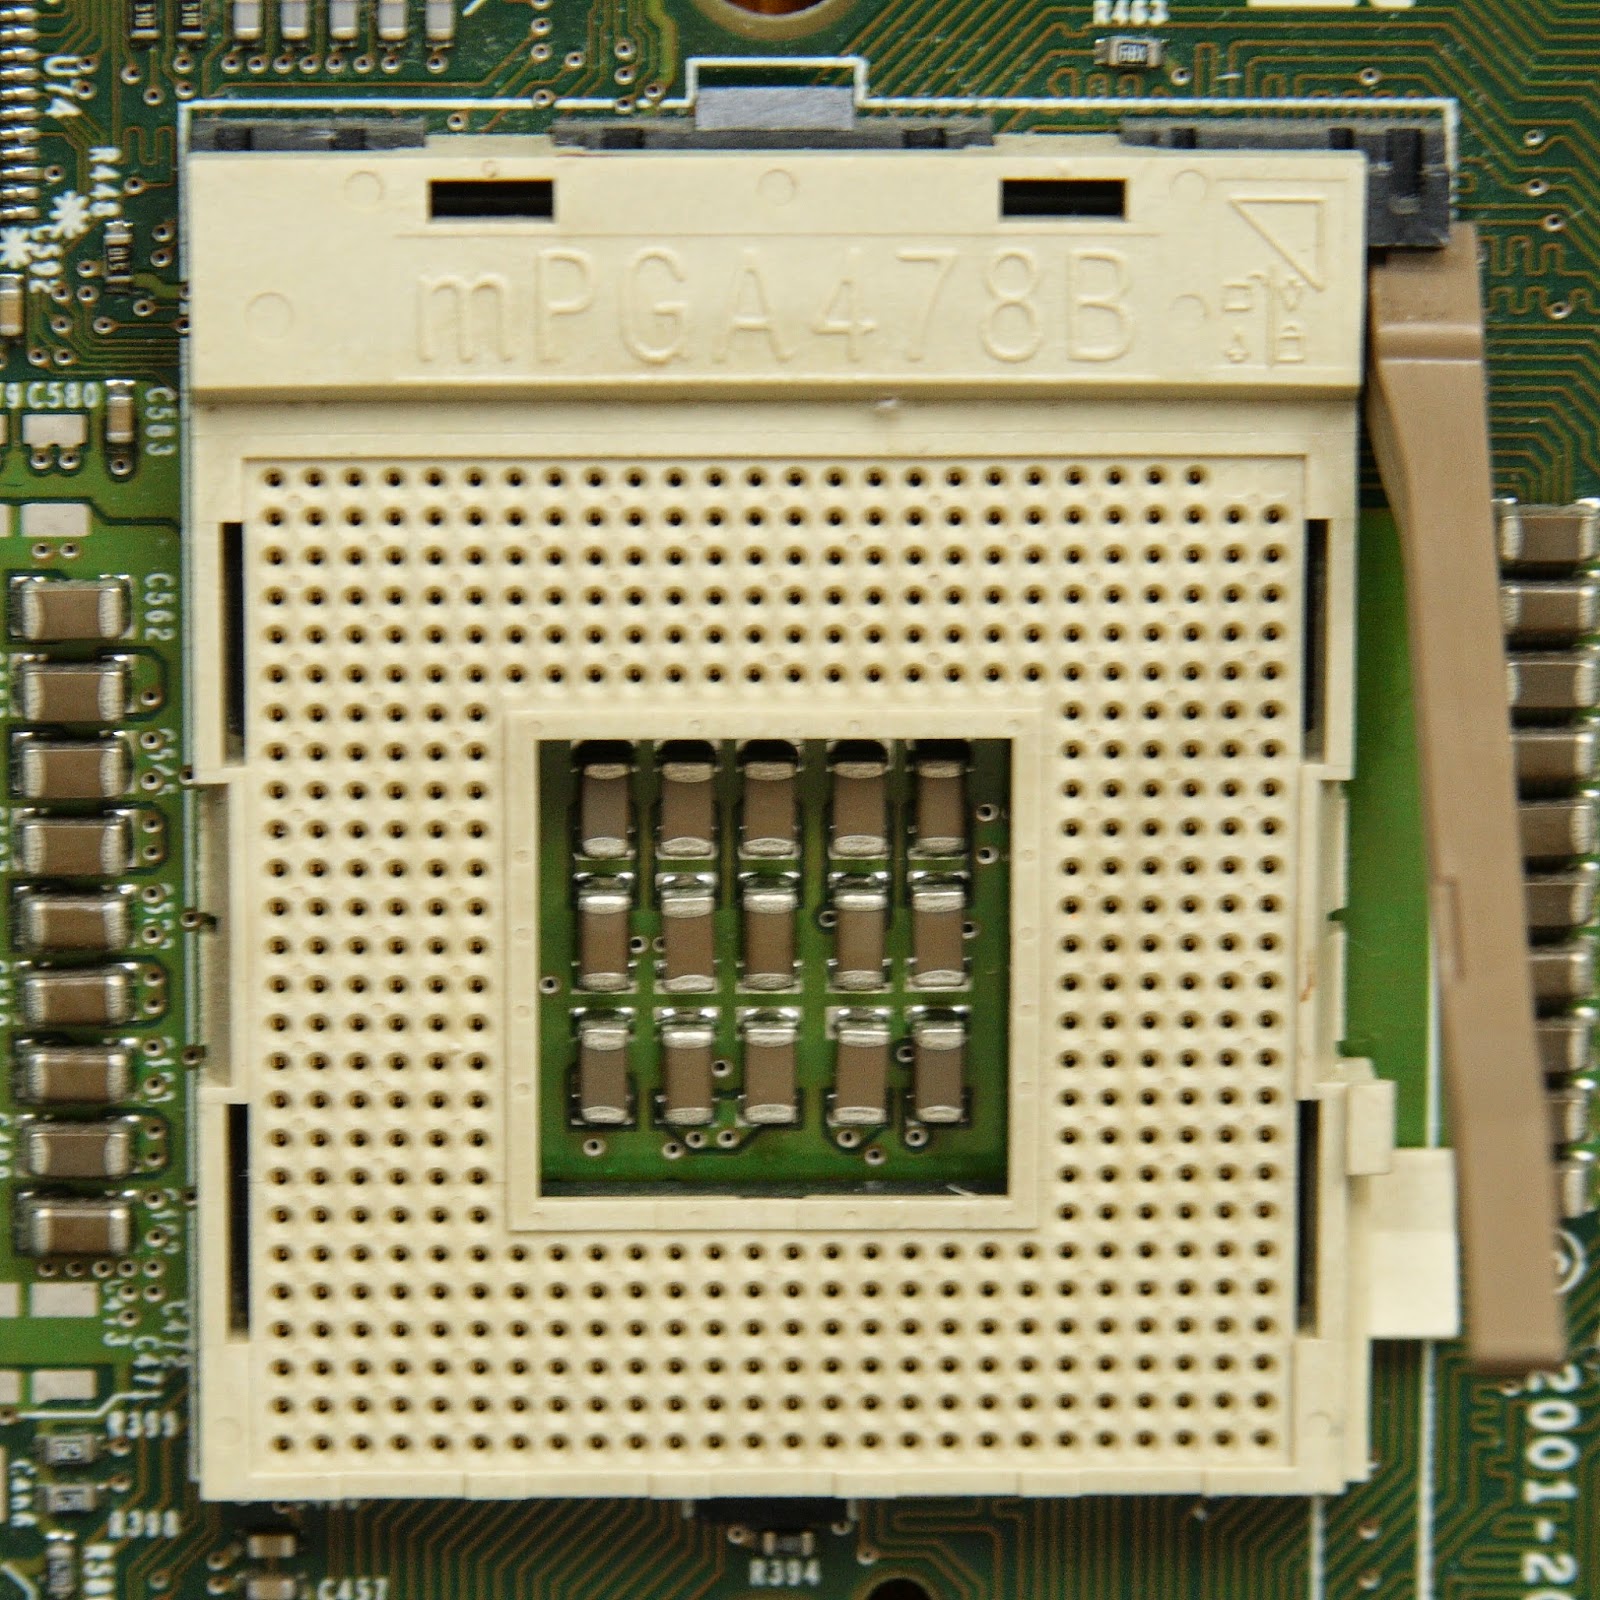 luthfi-boeleud-blog-s-processor-intel-yang-digunakan-untuk-socket-478